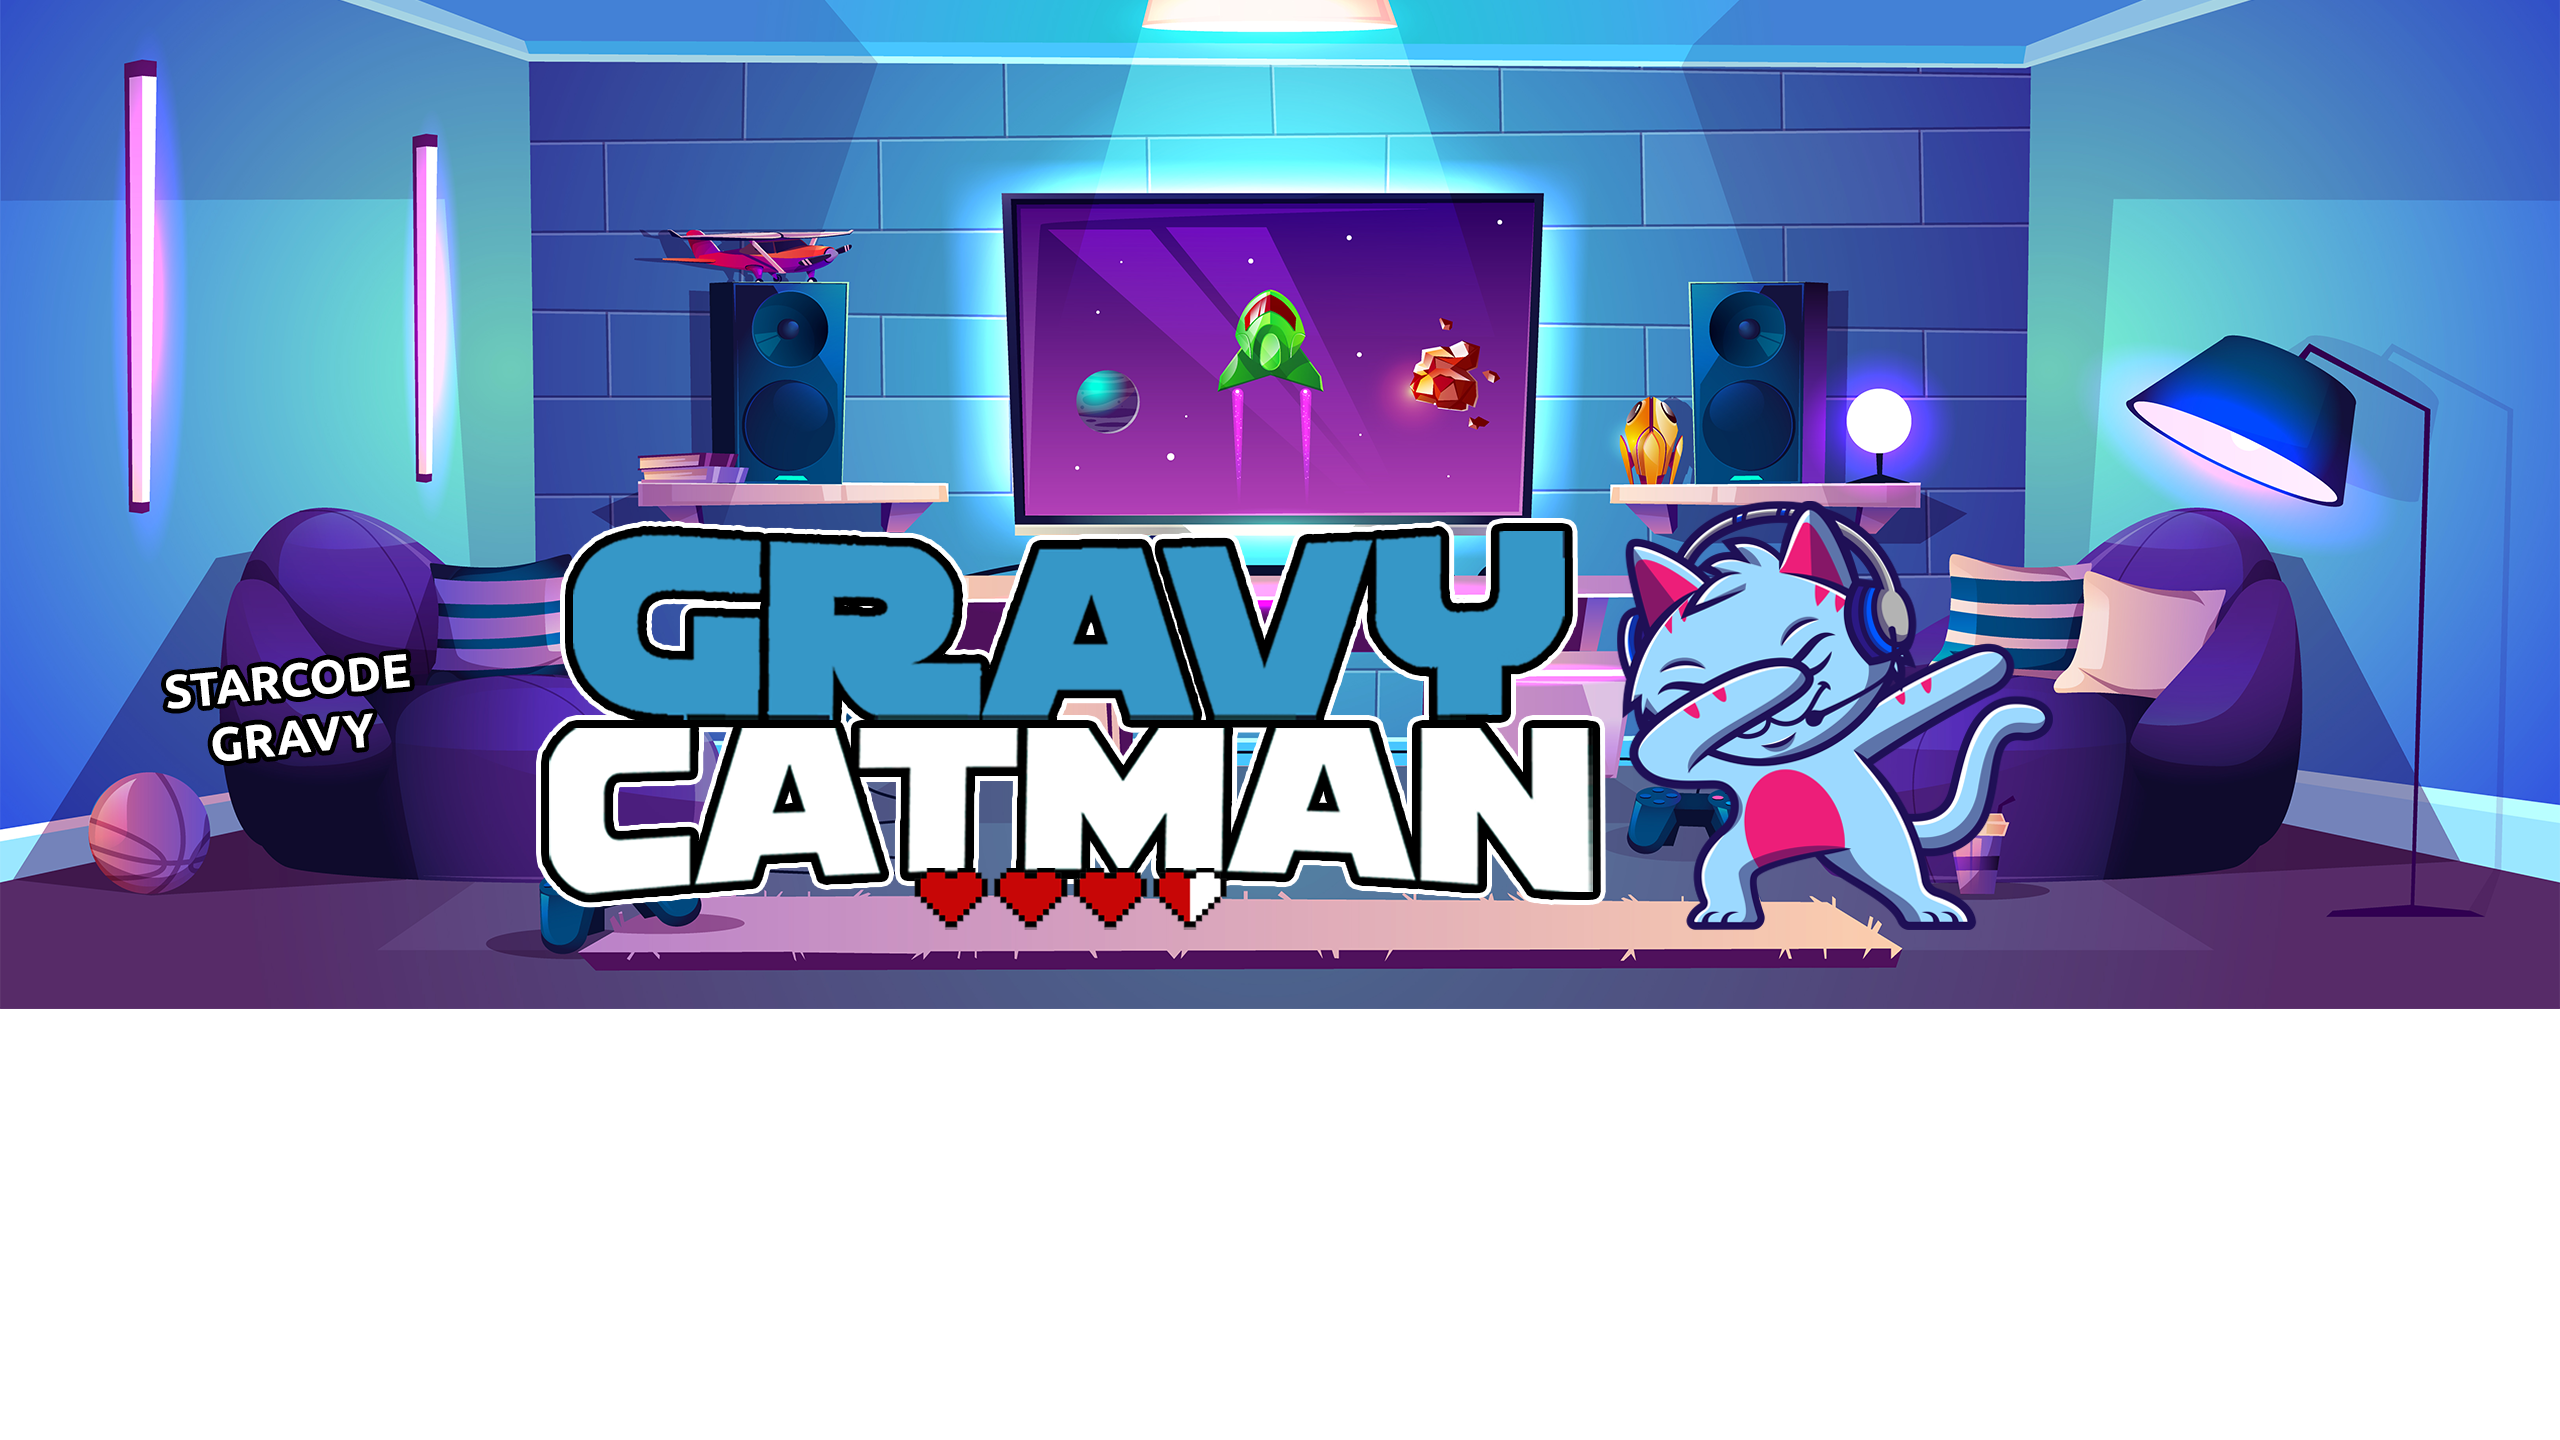 Gravycatman's Merch Store